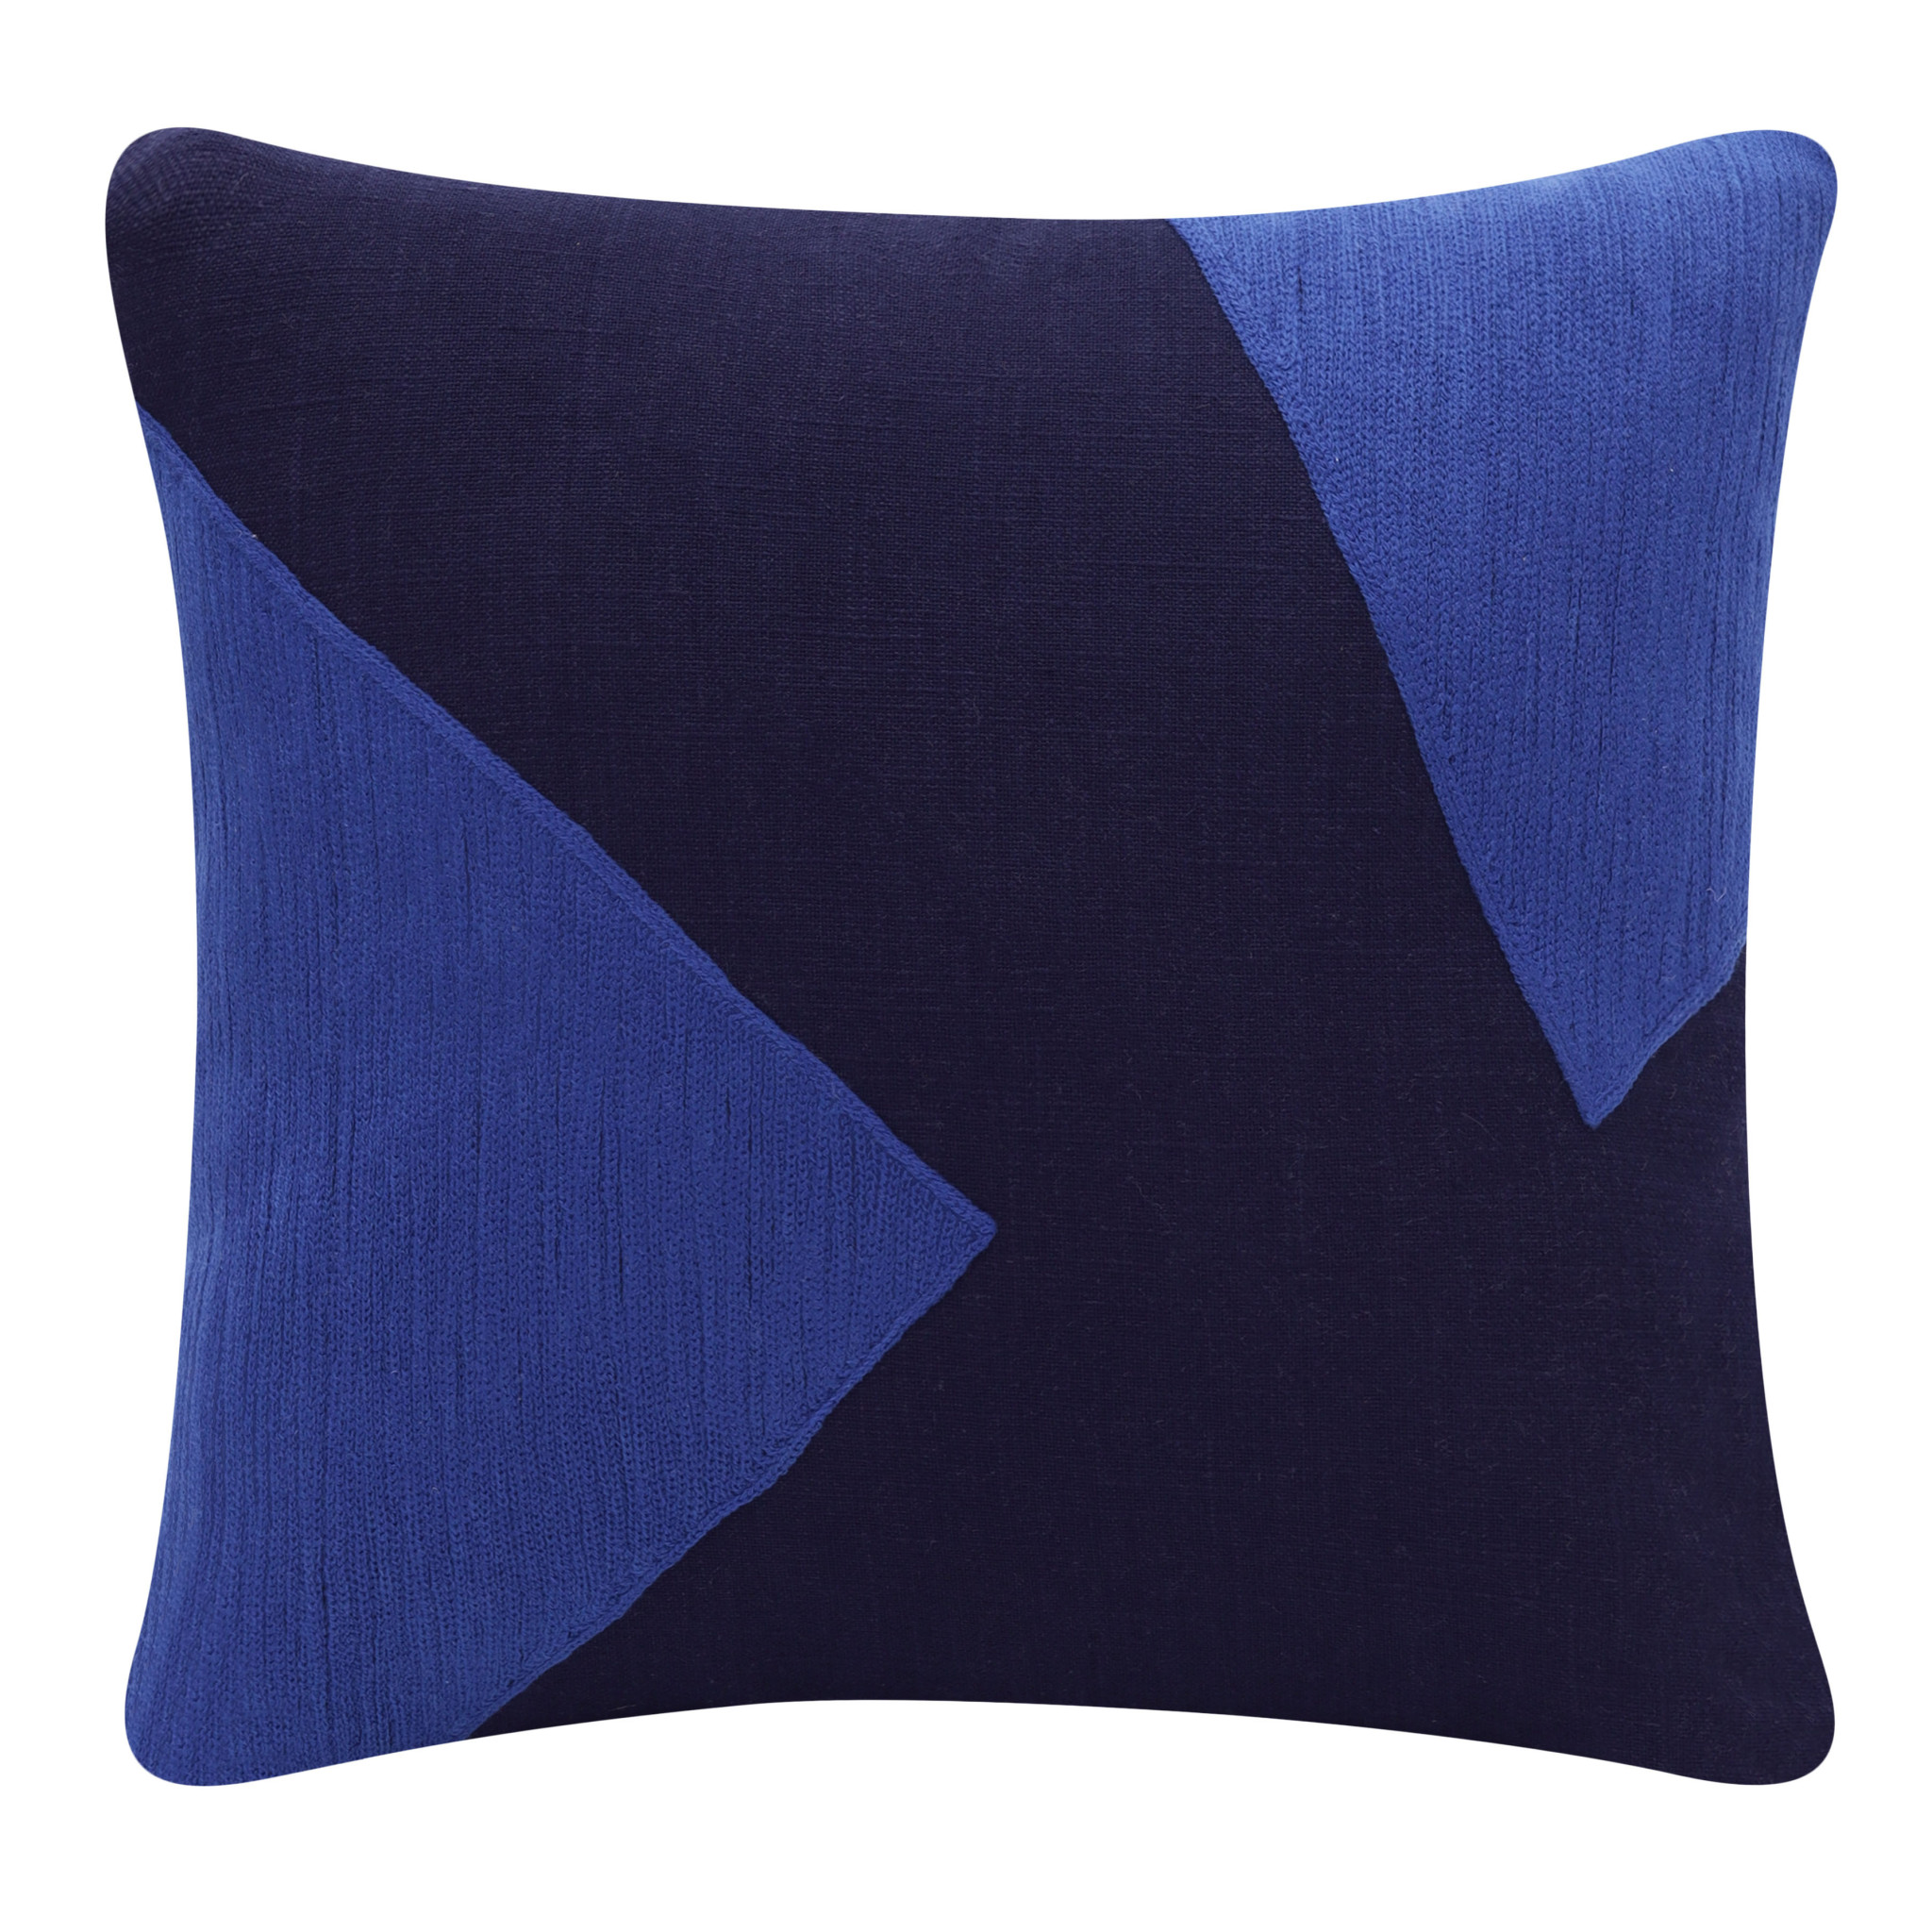 20" X 20" Cobalt Blue And Navy 100% Cotton Abstract Zippered Pillow-517041-1